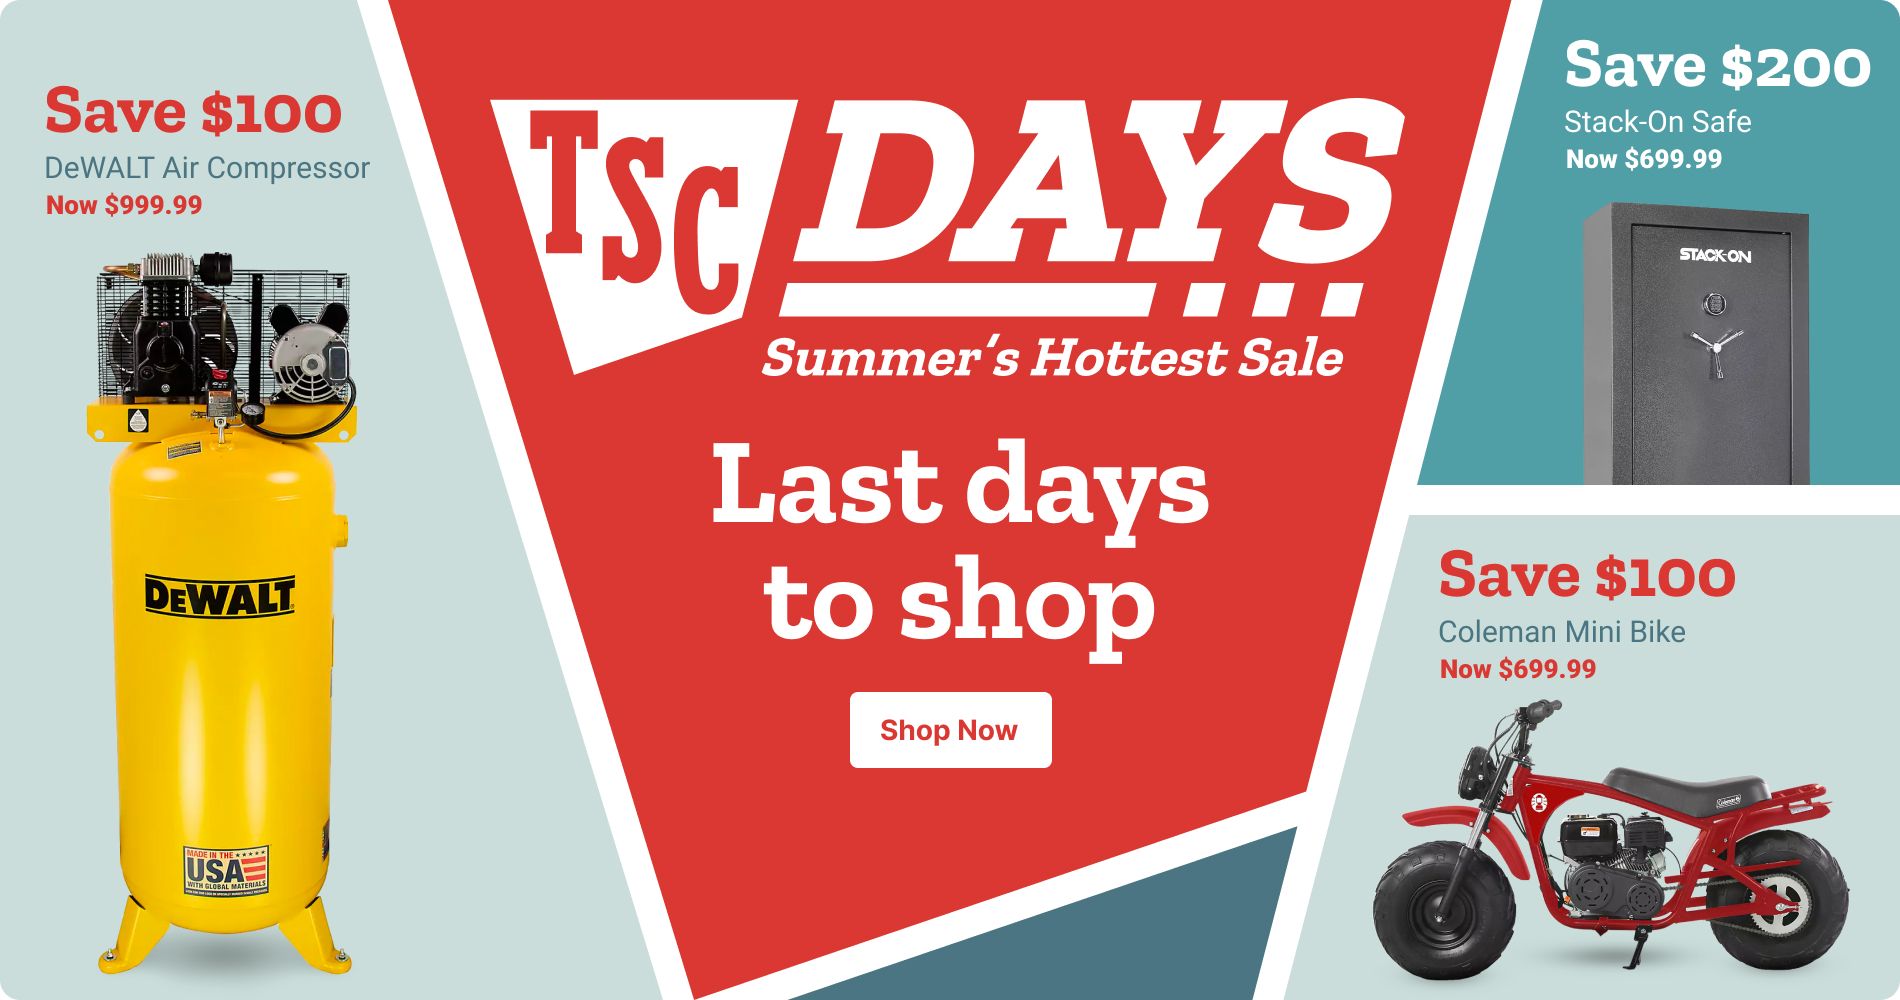 TSC Days - Summer's Hottest Sale. Last days to shop. Shop Now